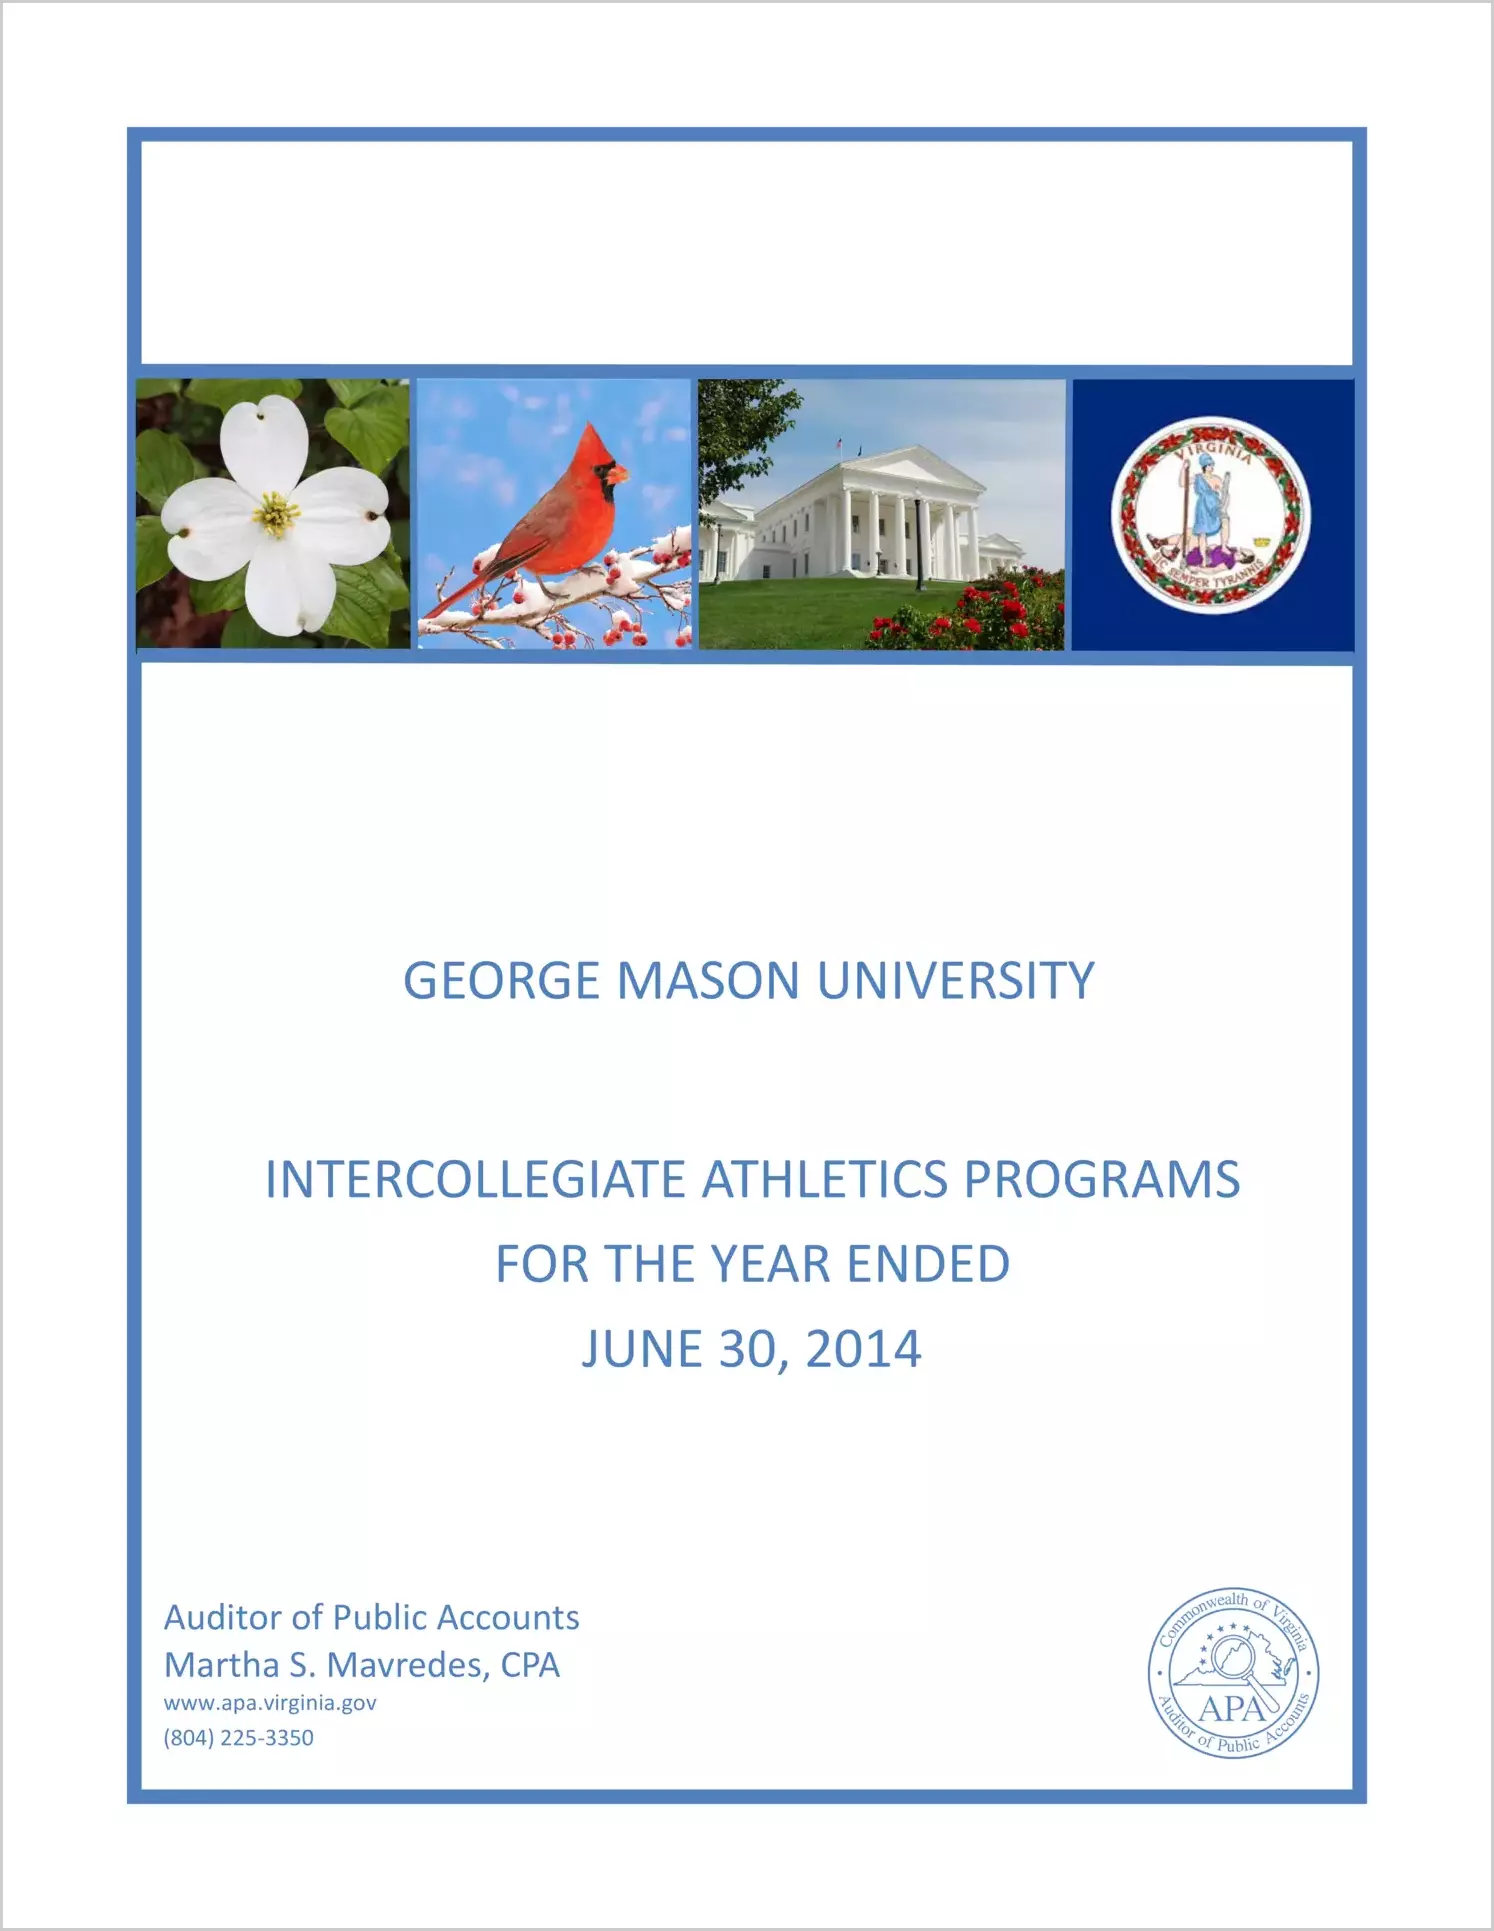 George Mason University Intercollegiate Athletics Programs for the year ended June 30, 2014